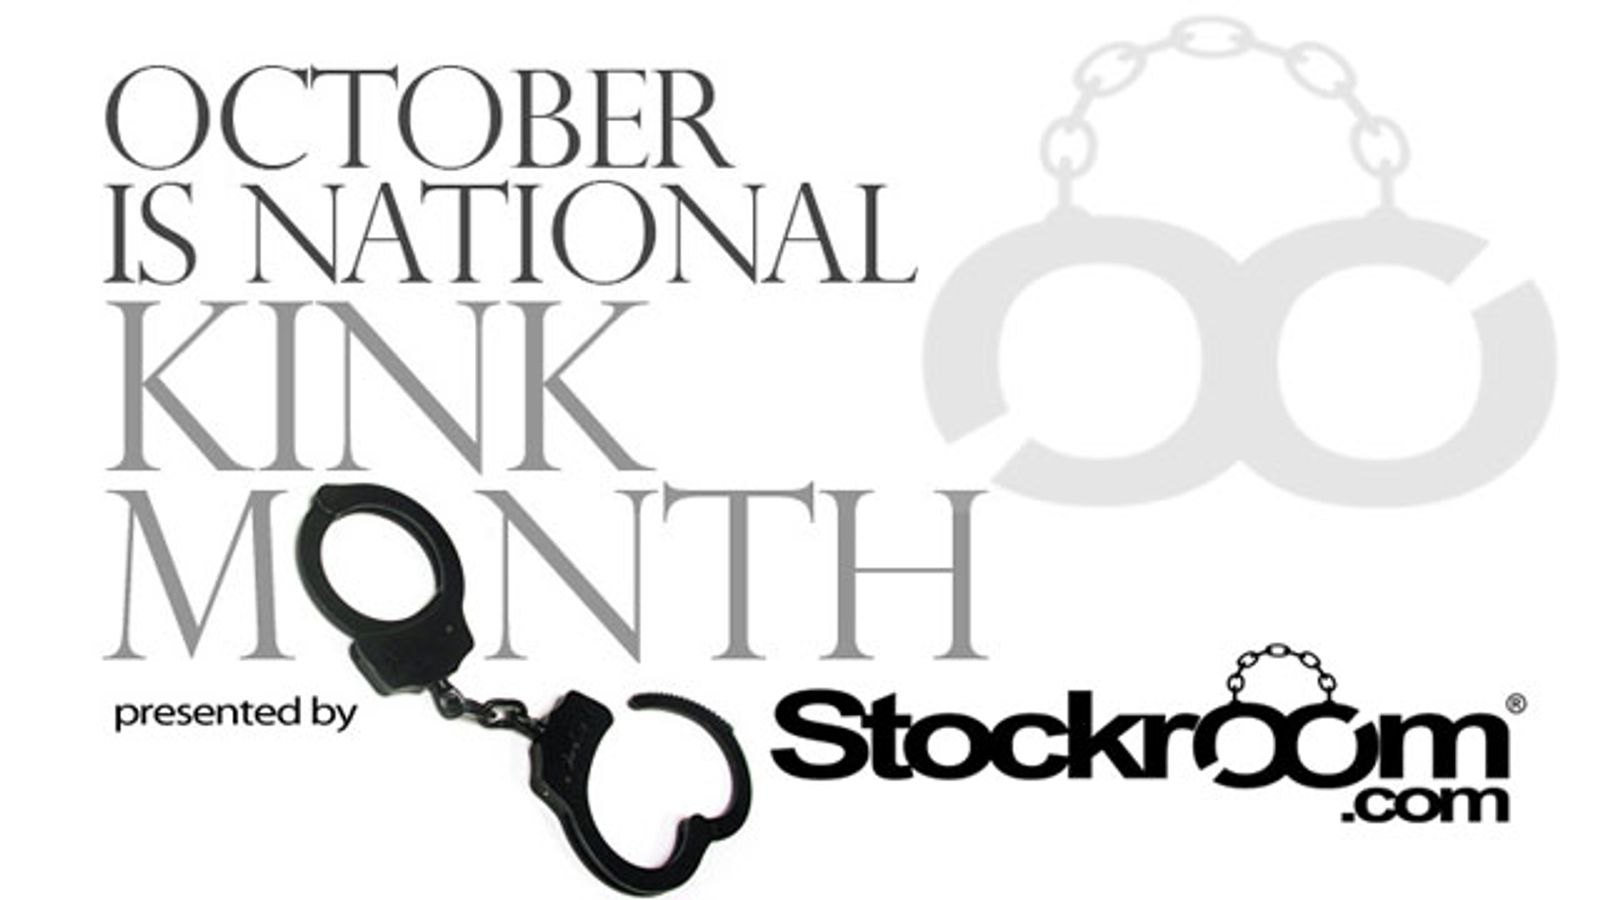 Stockroom.com Designates October as National Kink Month